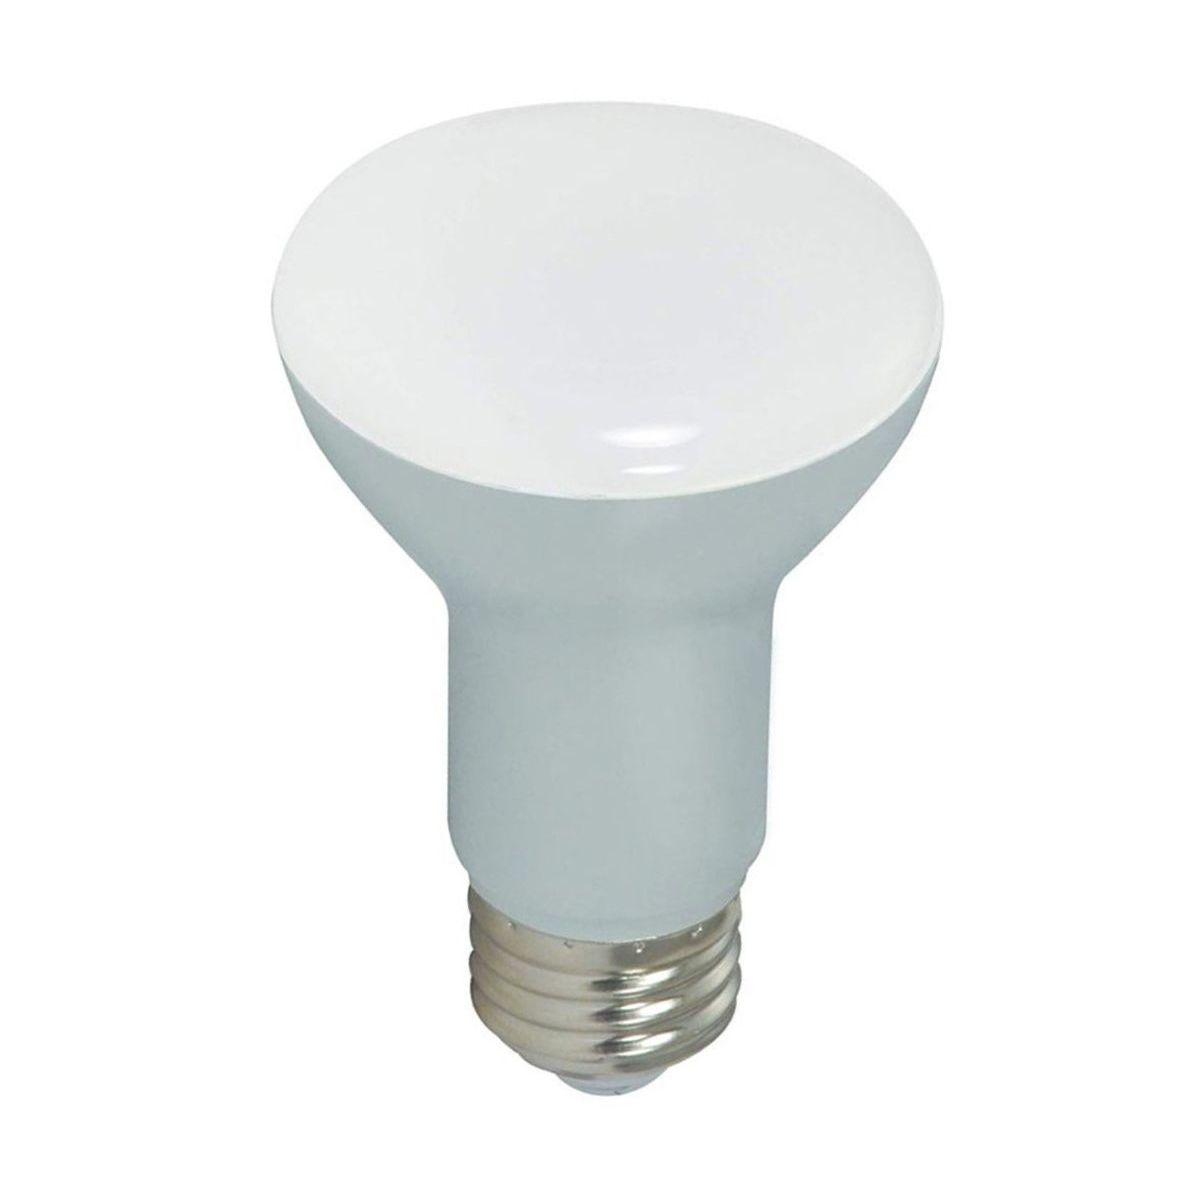 LED R20/BR20 Reflector bulb, 7 watt, 525 Lumens, 4000K, E26 Medium Base, 107 Deg. Flood, Dimmable